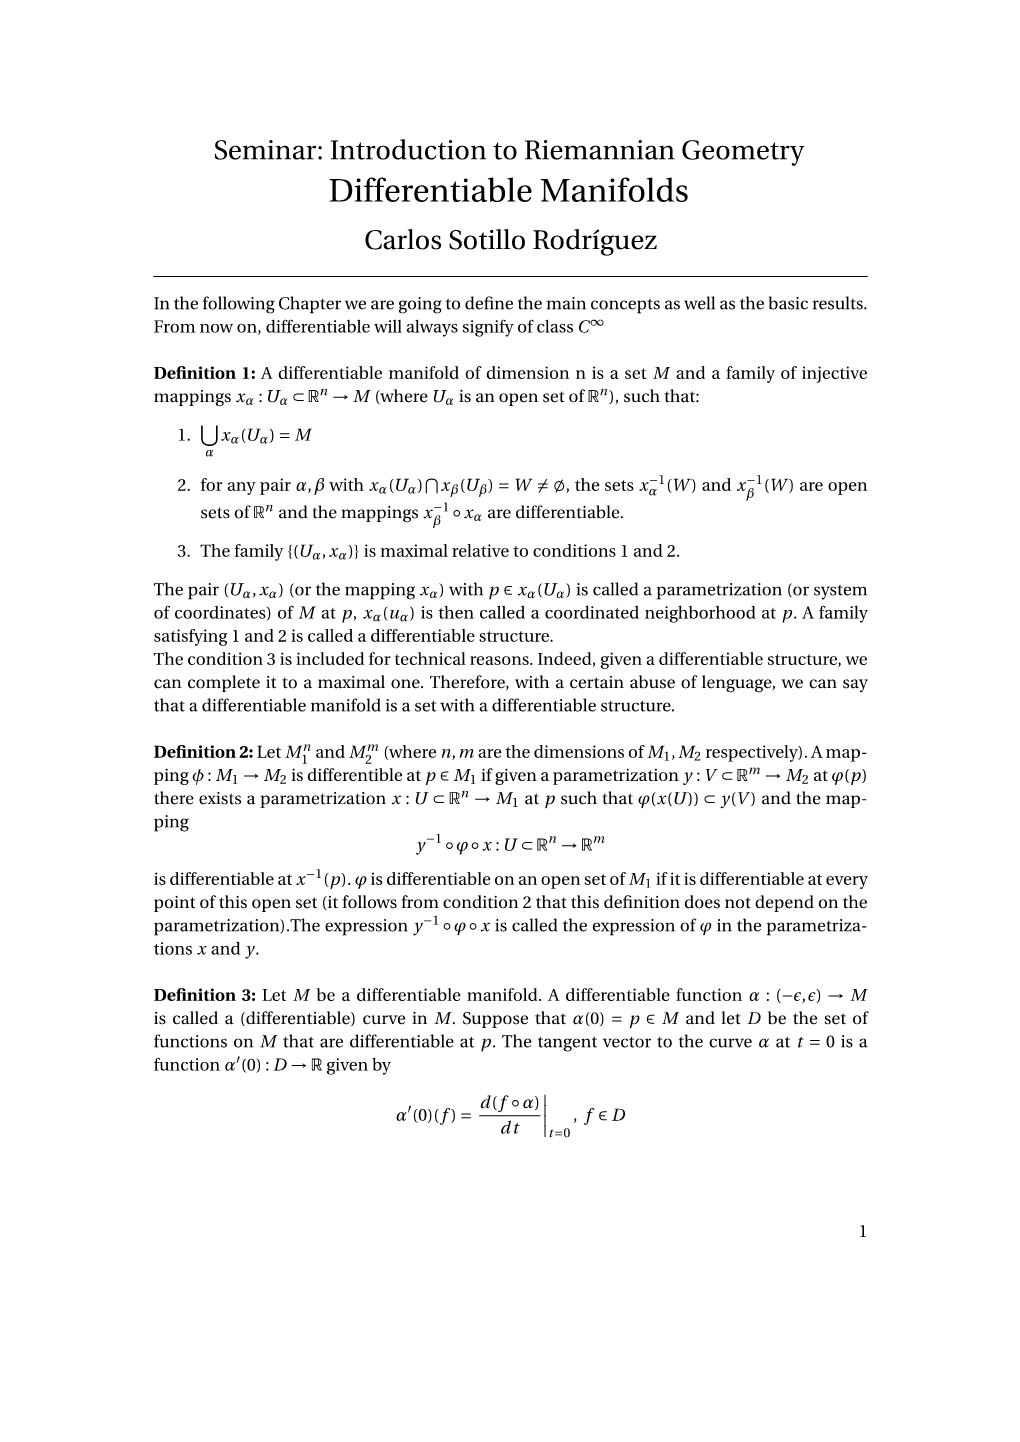 Differentiable Manifolds Carlos Sotillo Rodríguez